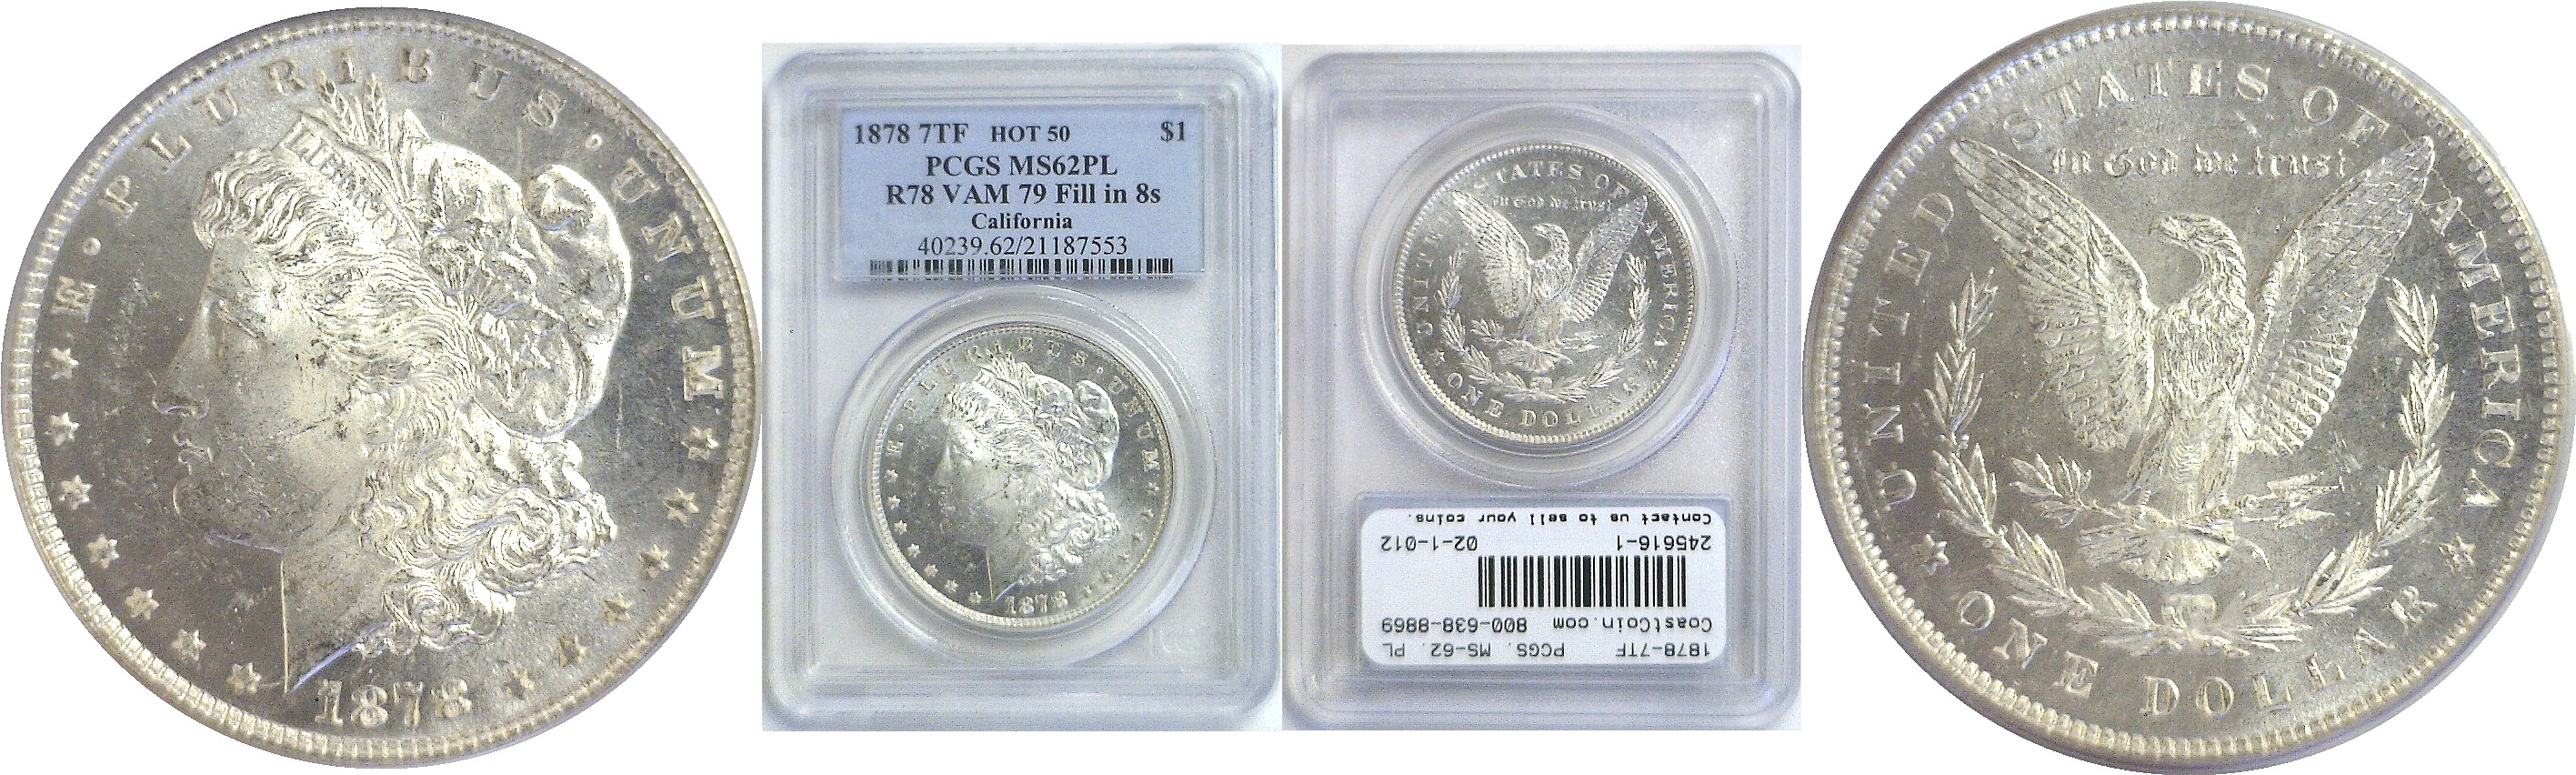 1878-7TF. PCGS. MS-62. PL. | Morgan Dollar | Coast to Coast Coins